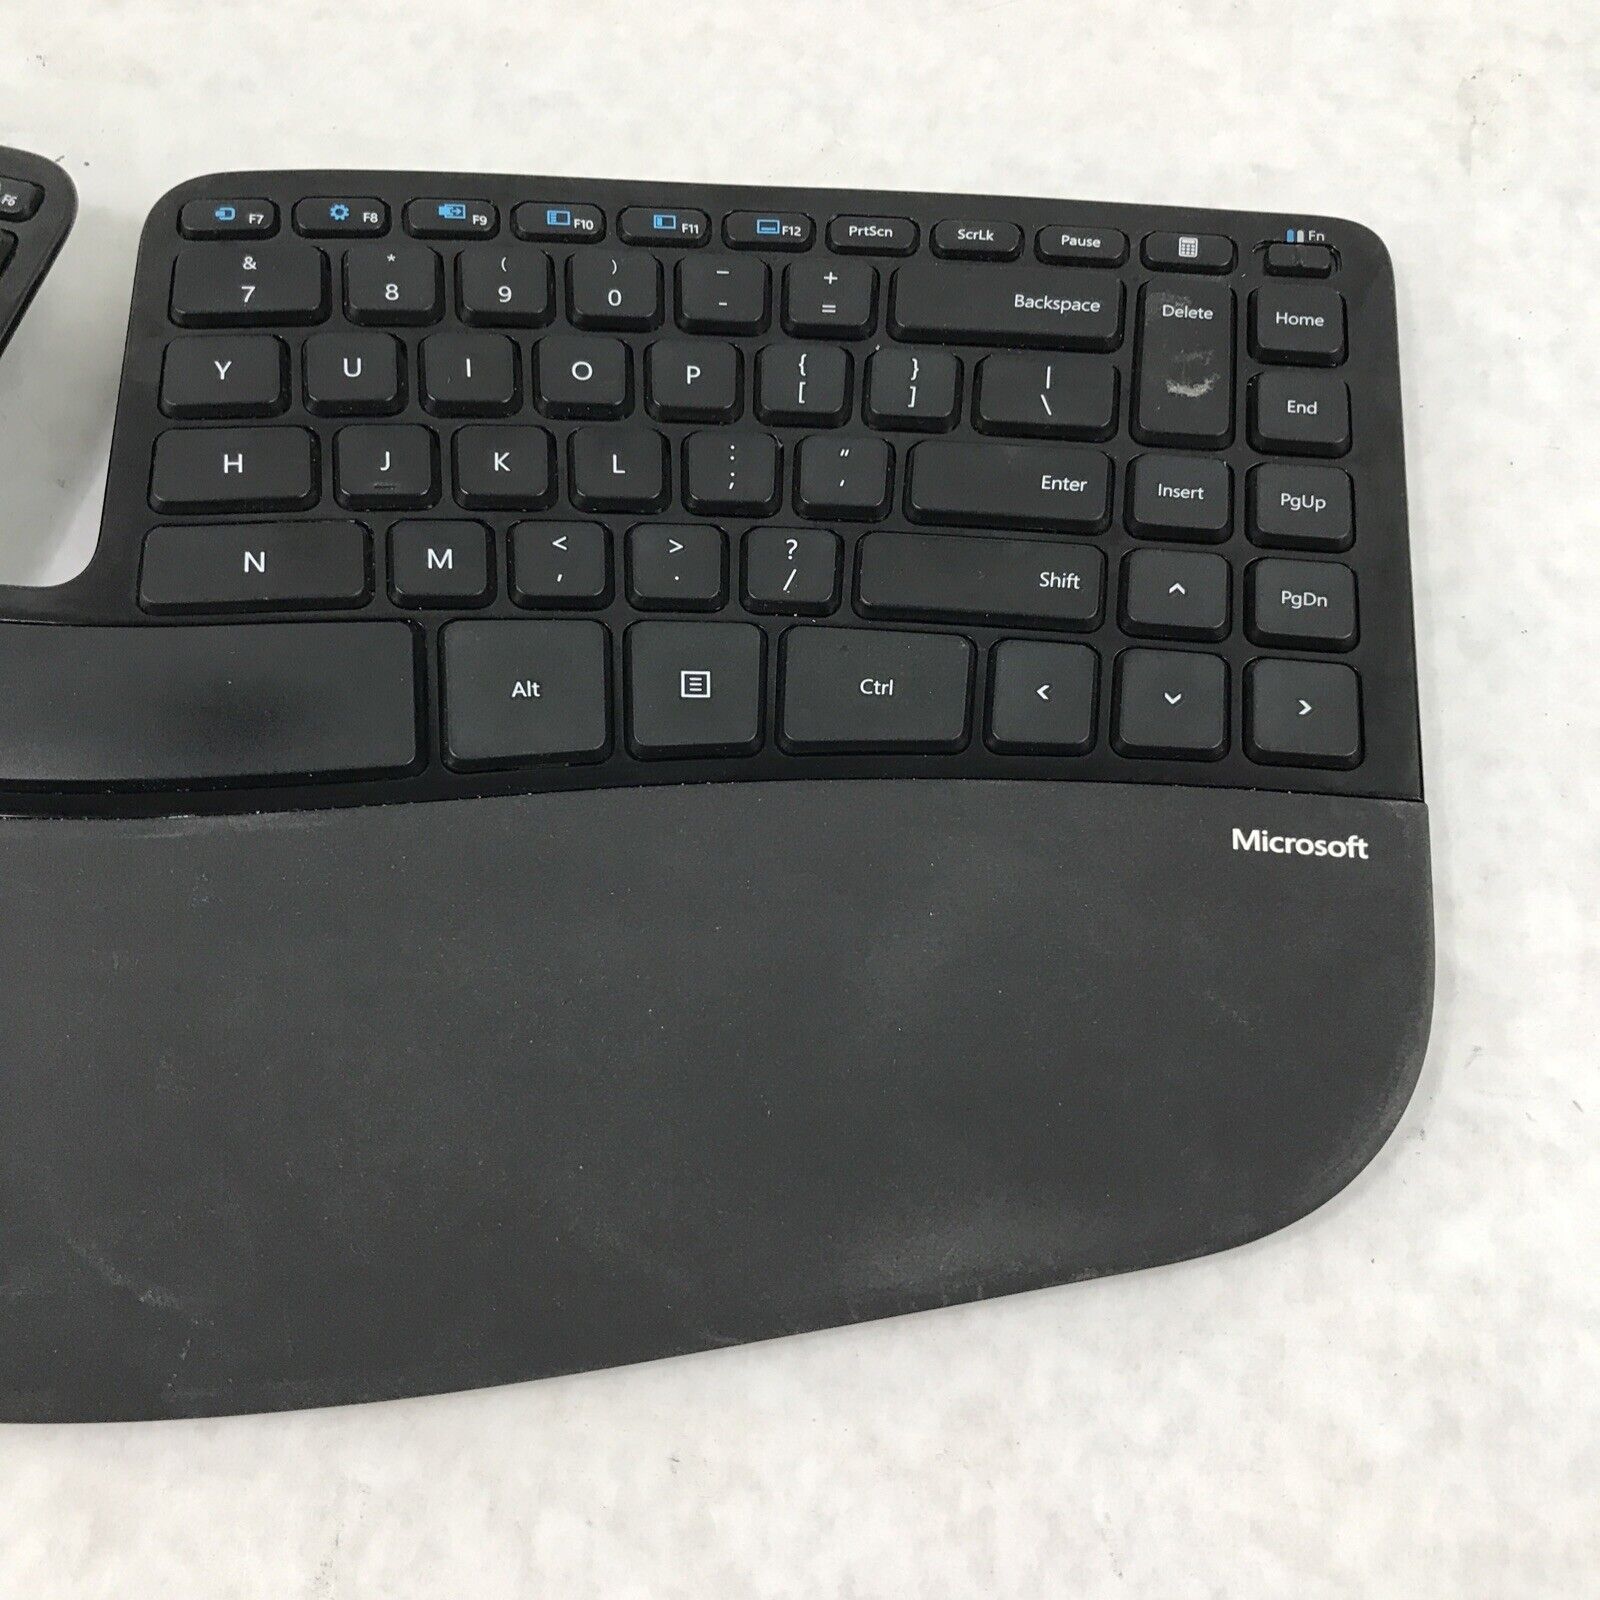 Microsoft X878016-001 1559 Sculpt Ergonomic Wireless PC Keyboard Surface Edition